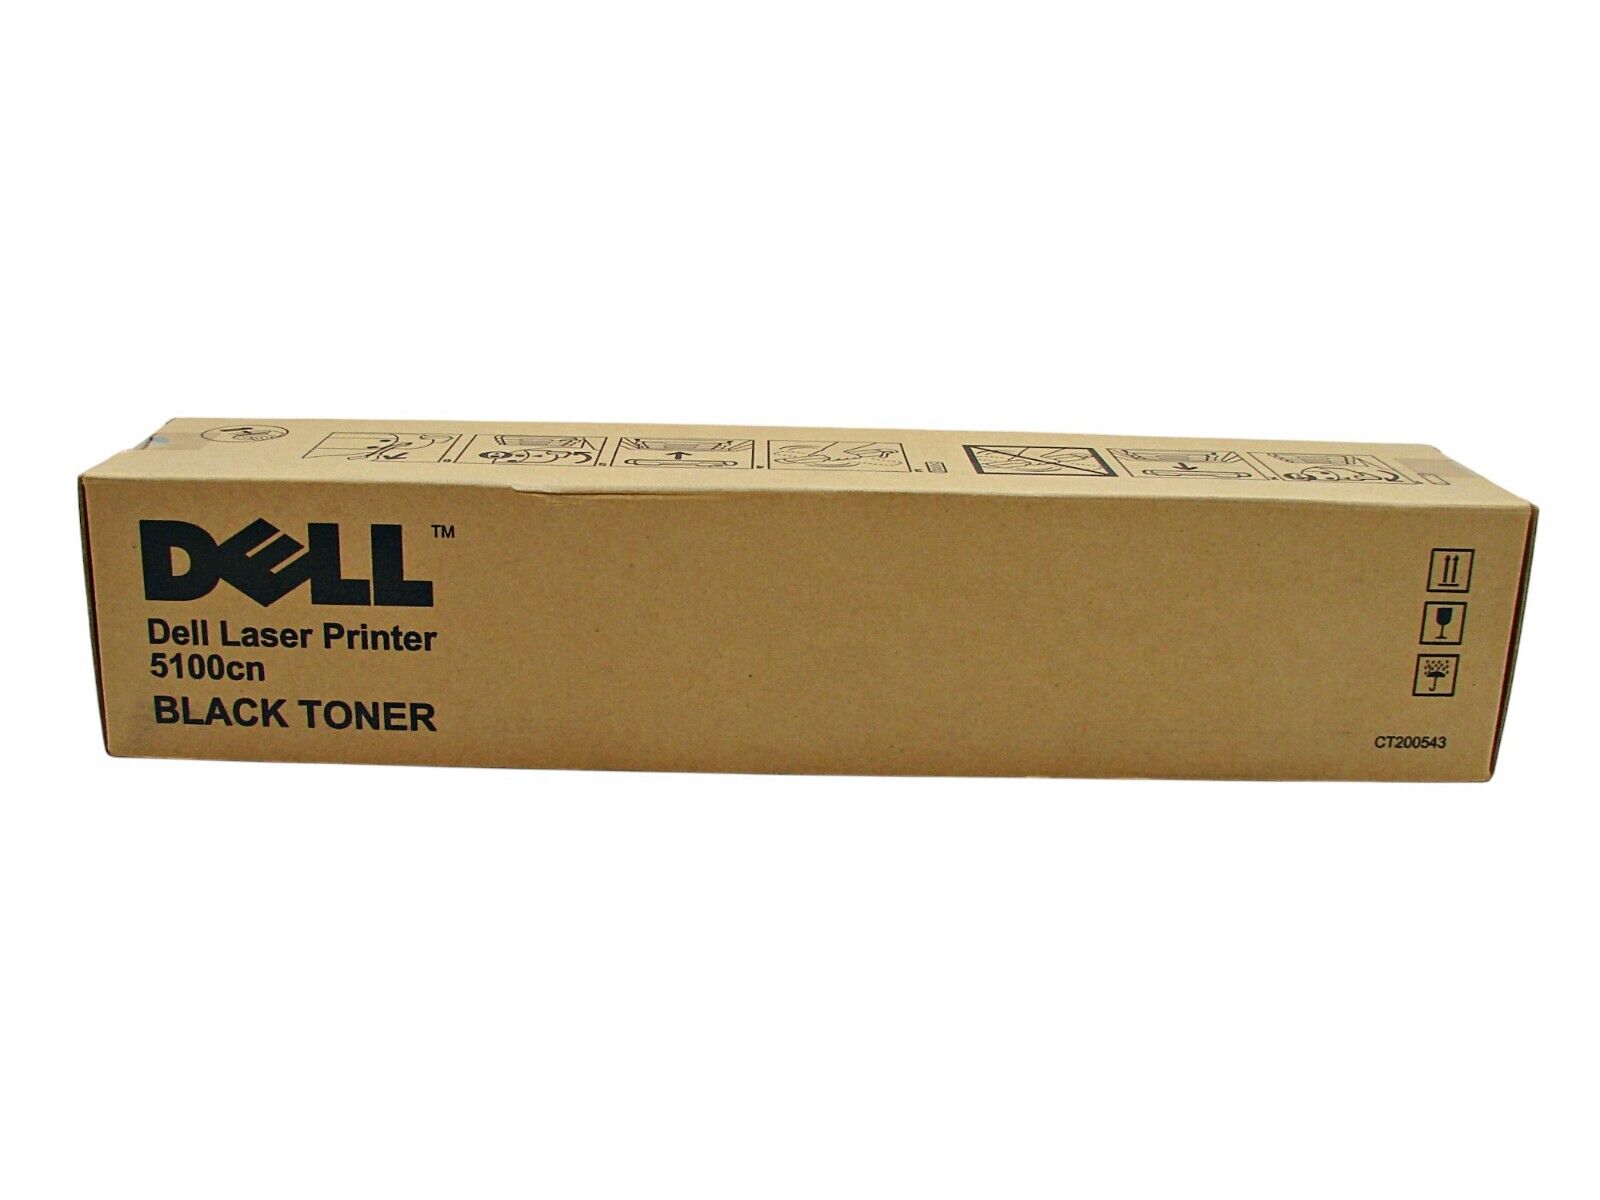 NEW Dell GG577 Toner Cartridge - BLACK - Dell 5100cn - CT200543 NIB